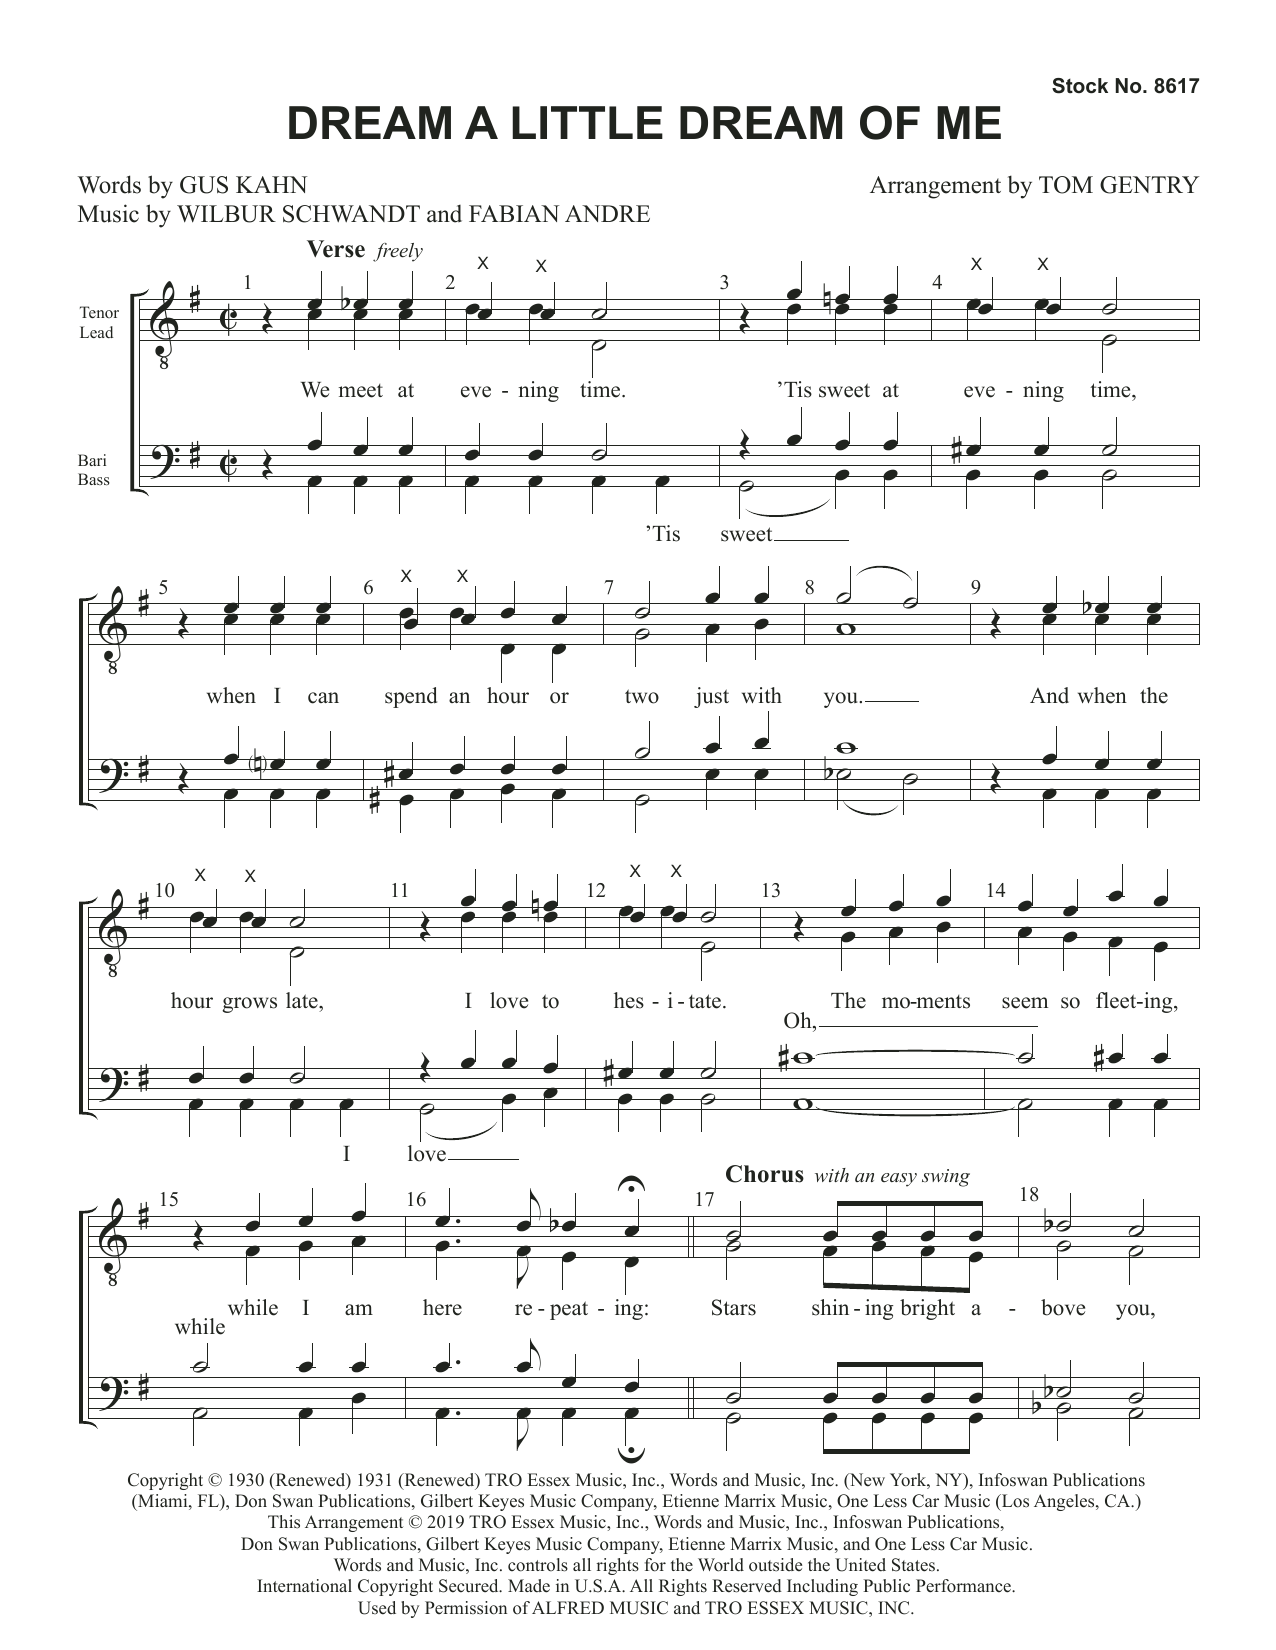 Gus Kahn Dream a Little Dream of Me (arr. Tom Gentry) Sheet Music Notes & Chords for TTBB Choir - Download or Print PDF